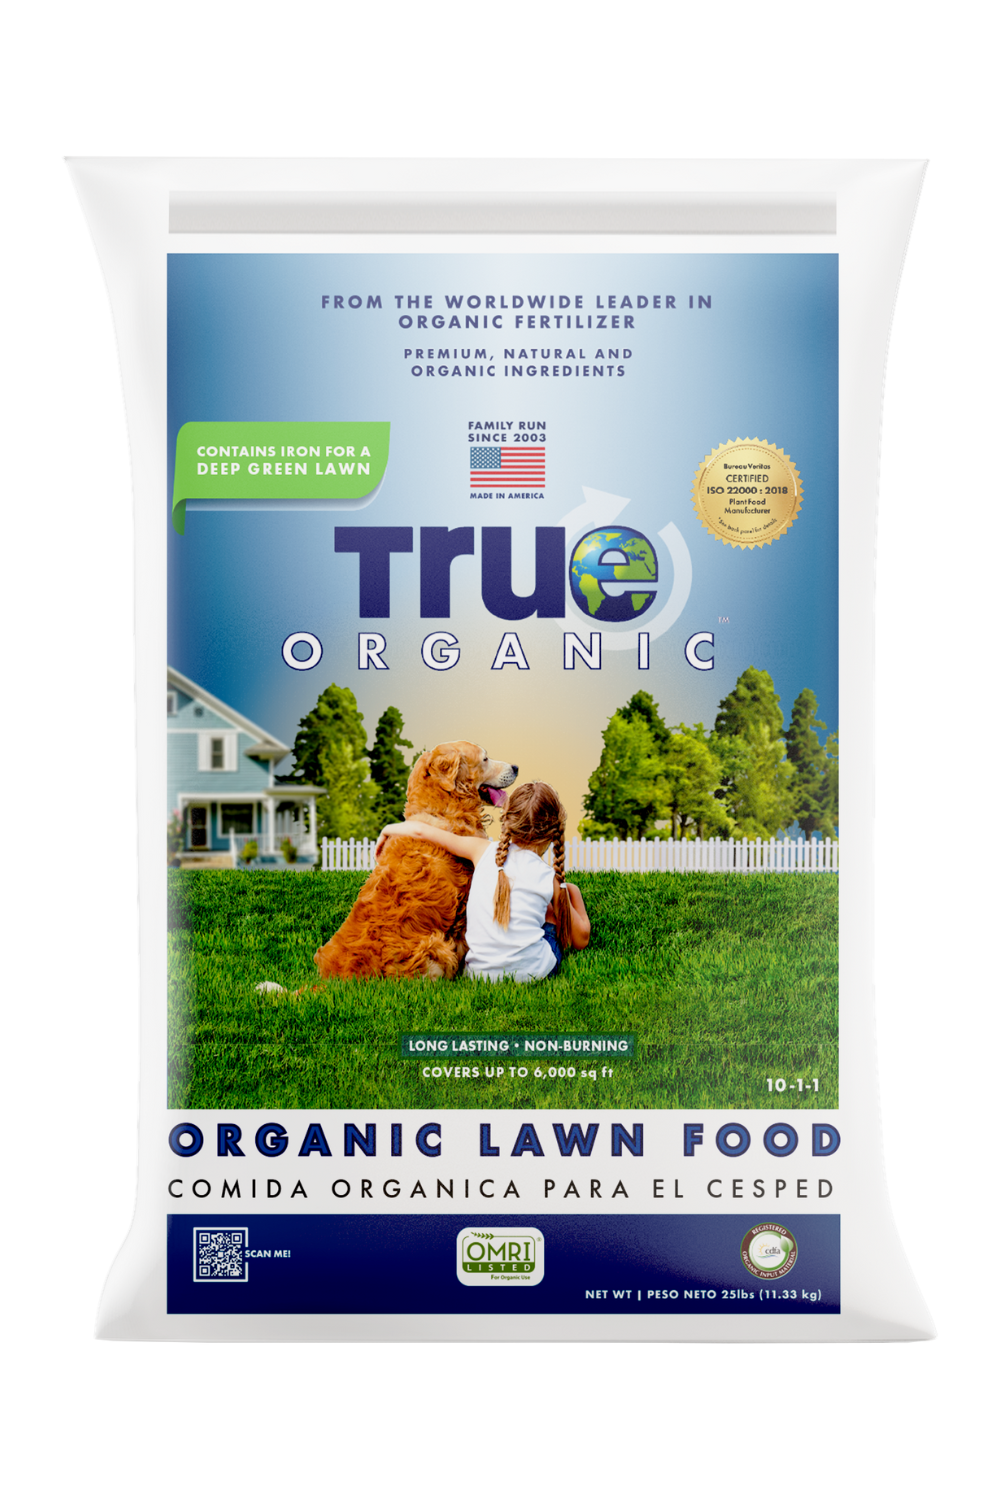 organic lawn food